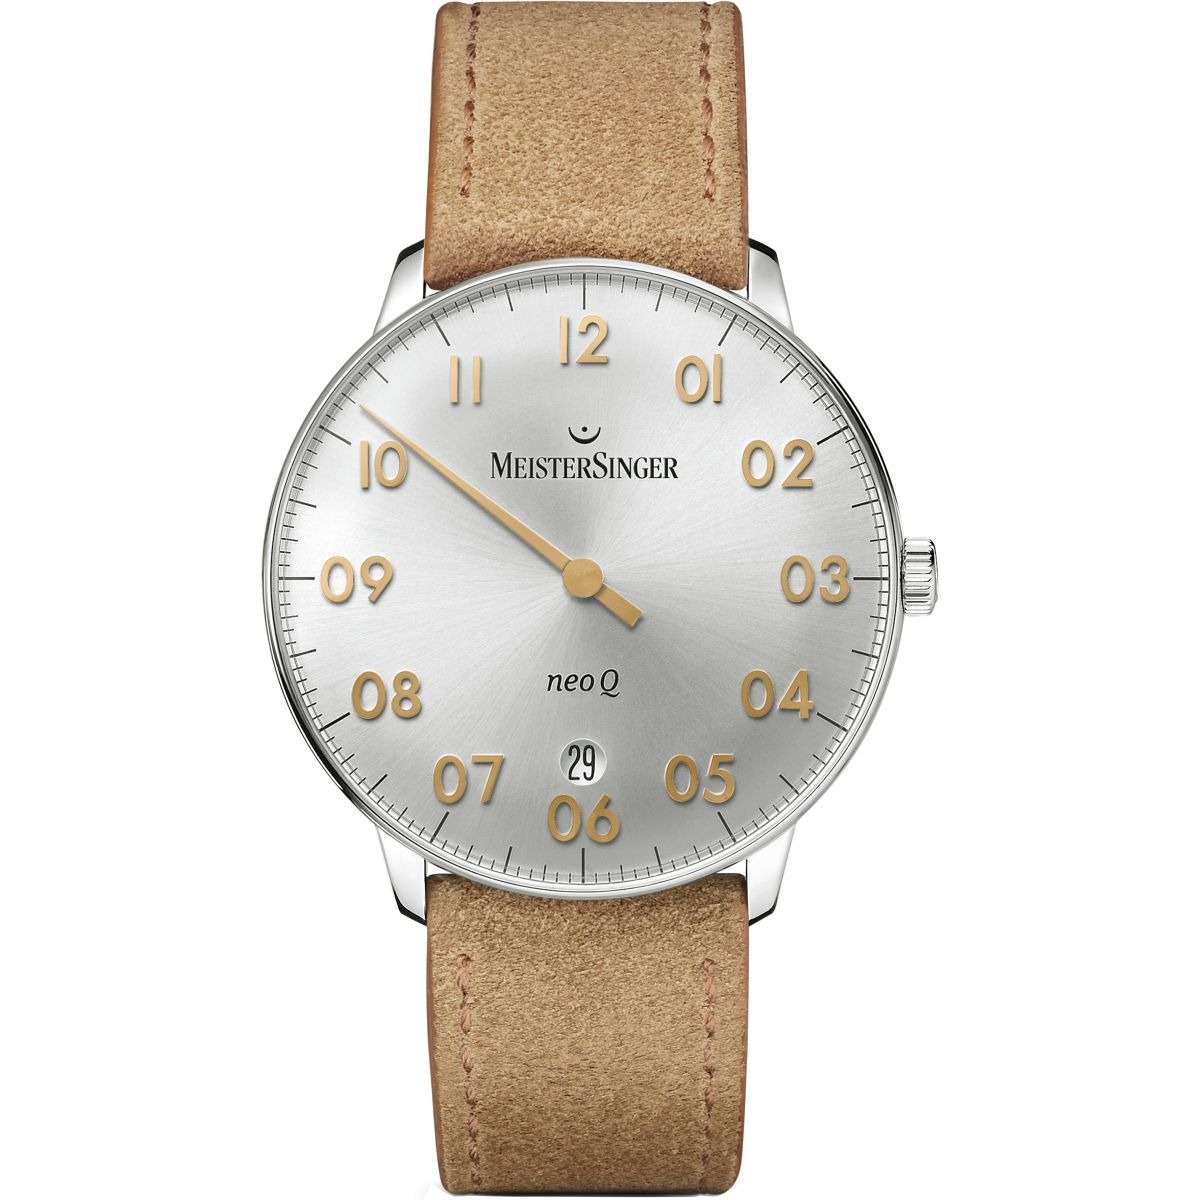 Man Silver - Watch - Watch Shop GOOFASH